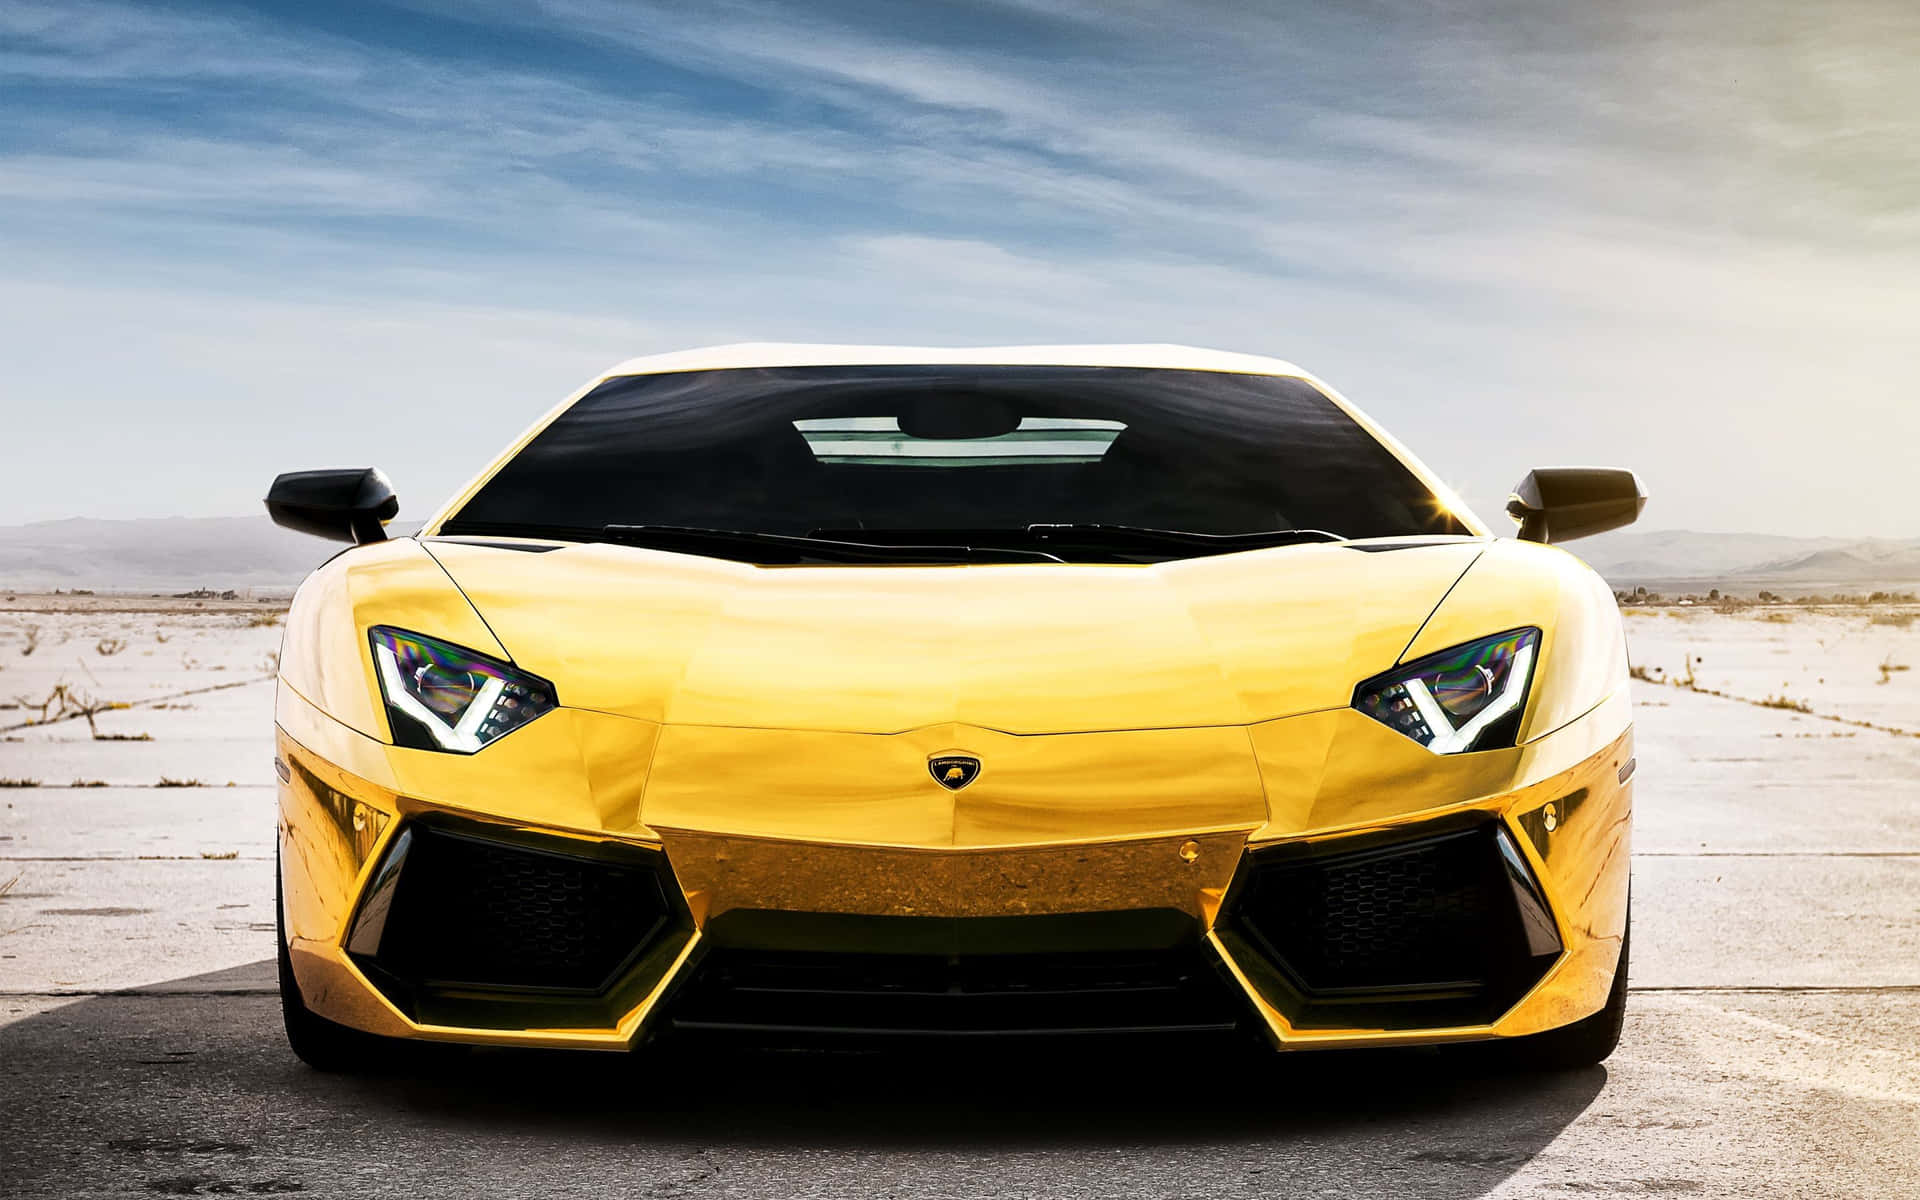 Exquisite-looking Yellow Gold Lamborghini Wallpaper